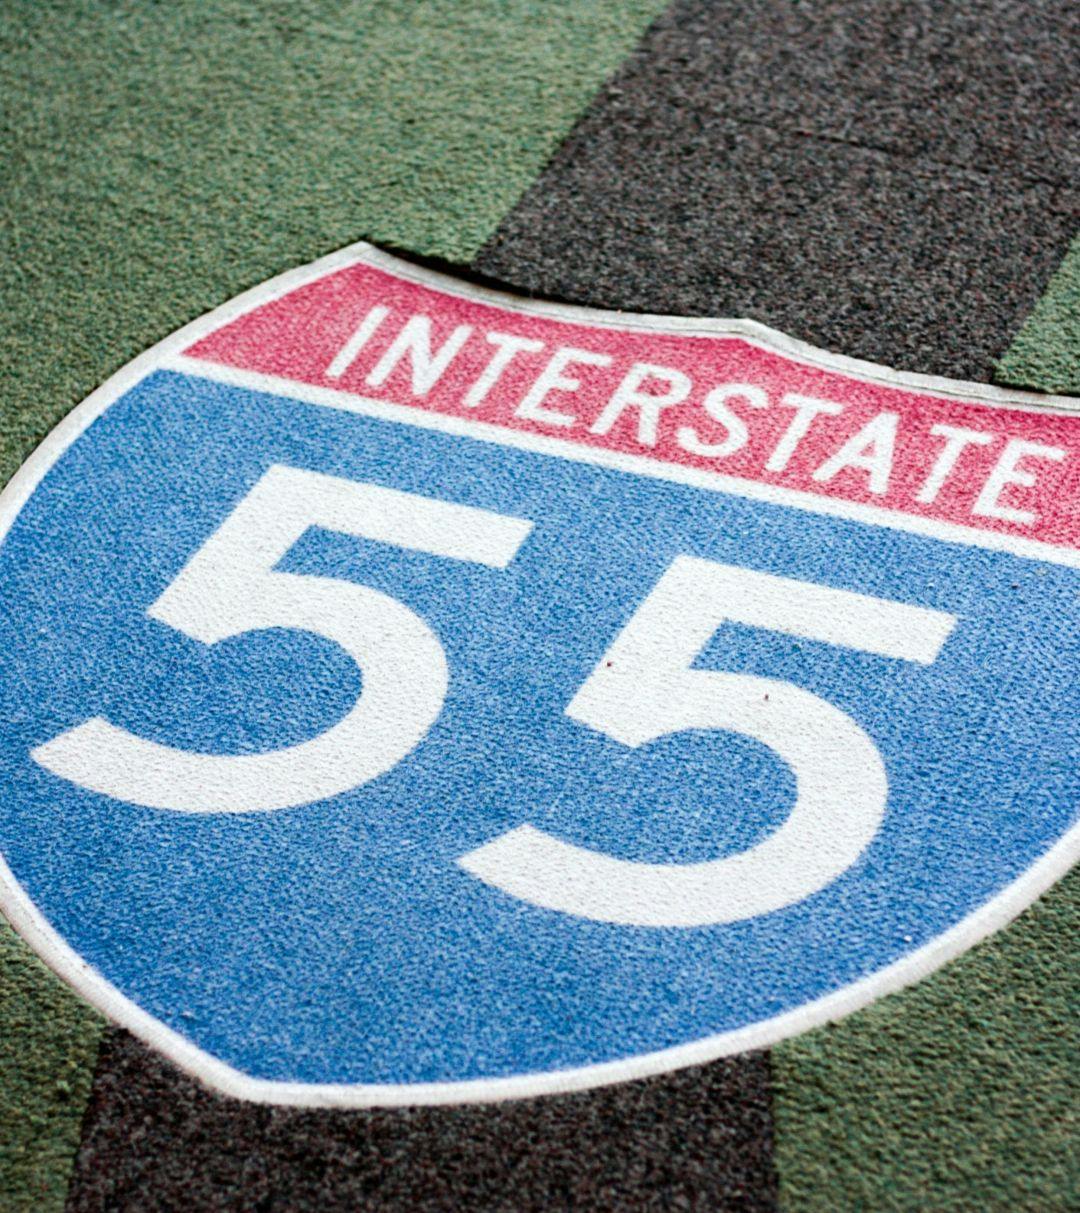 Interstate 55 sign